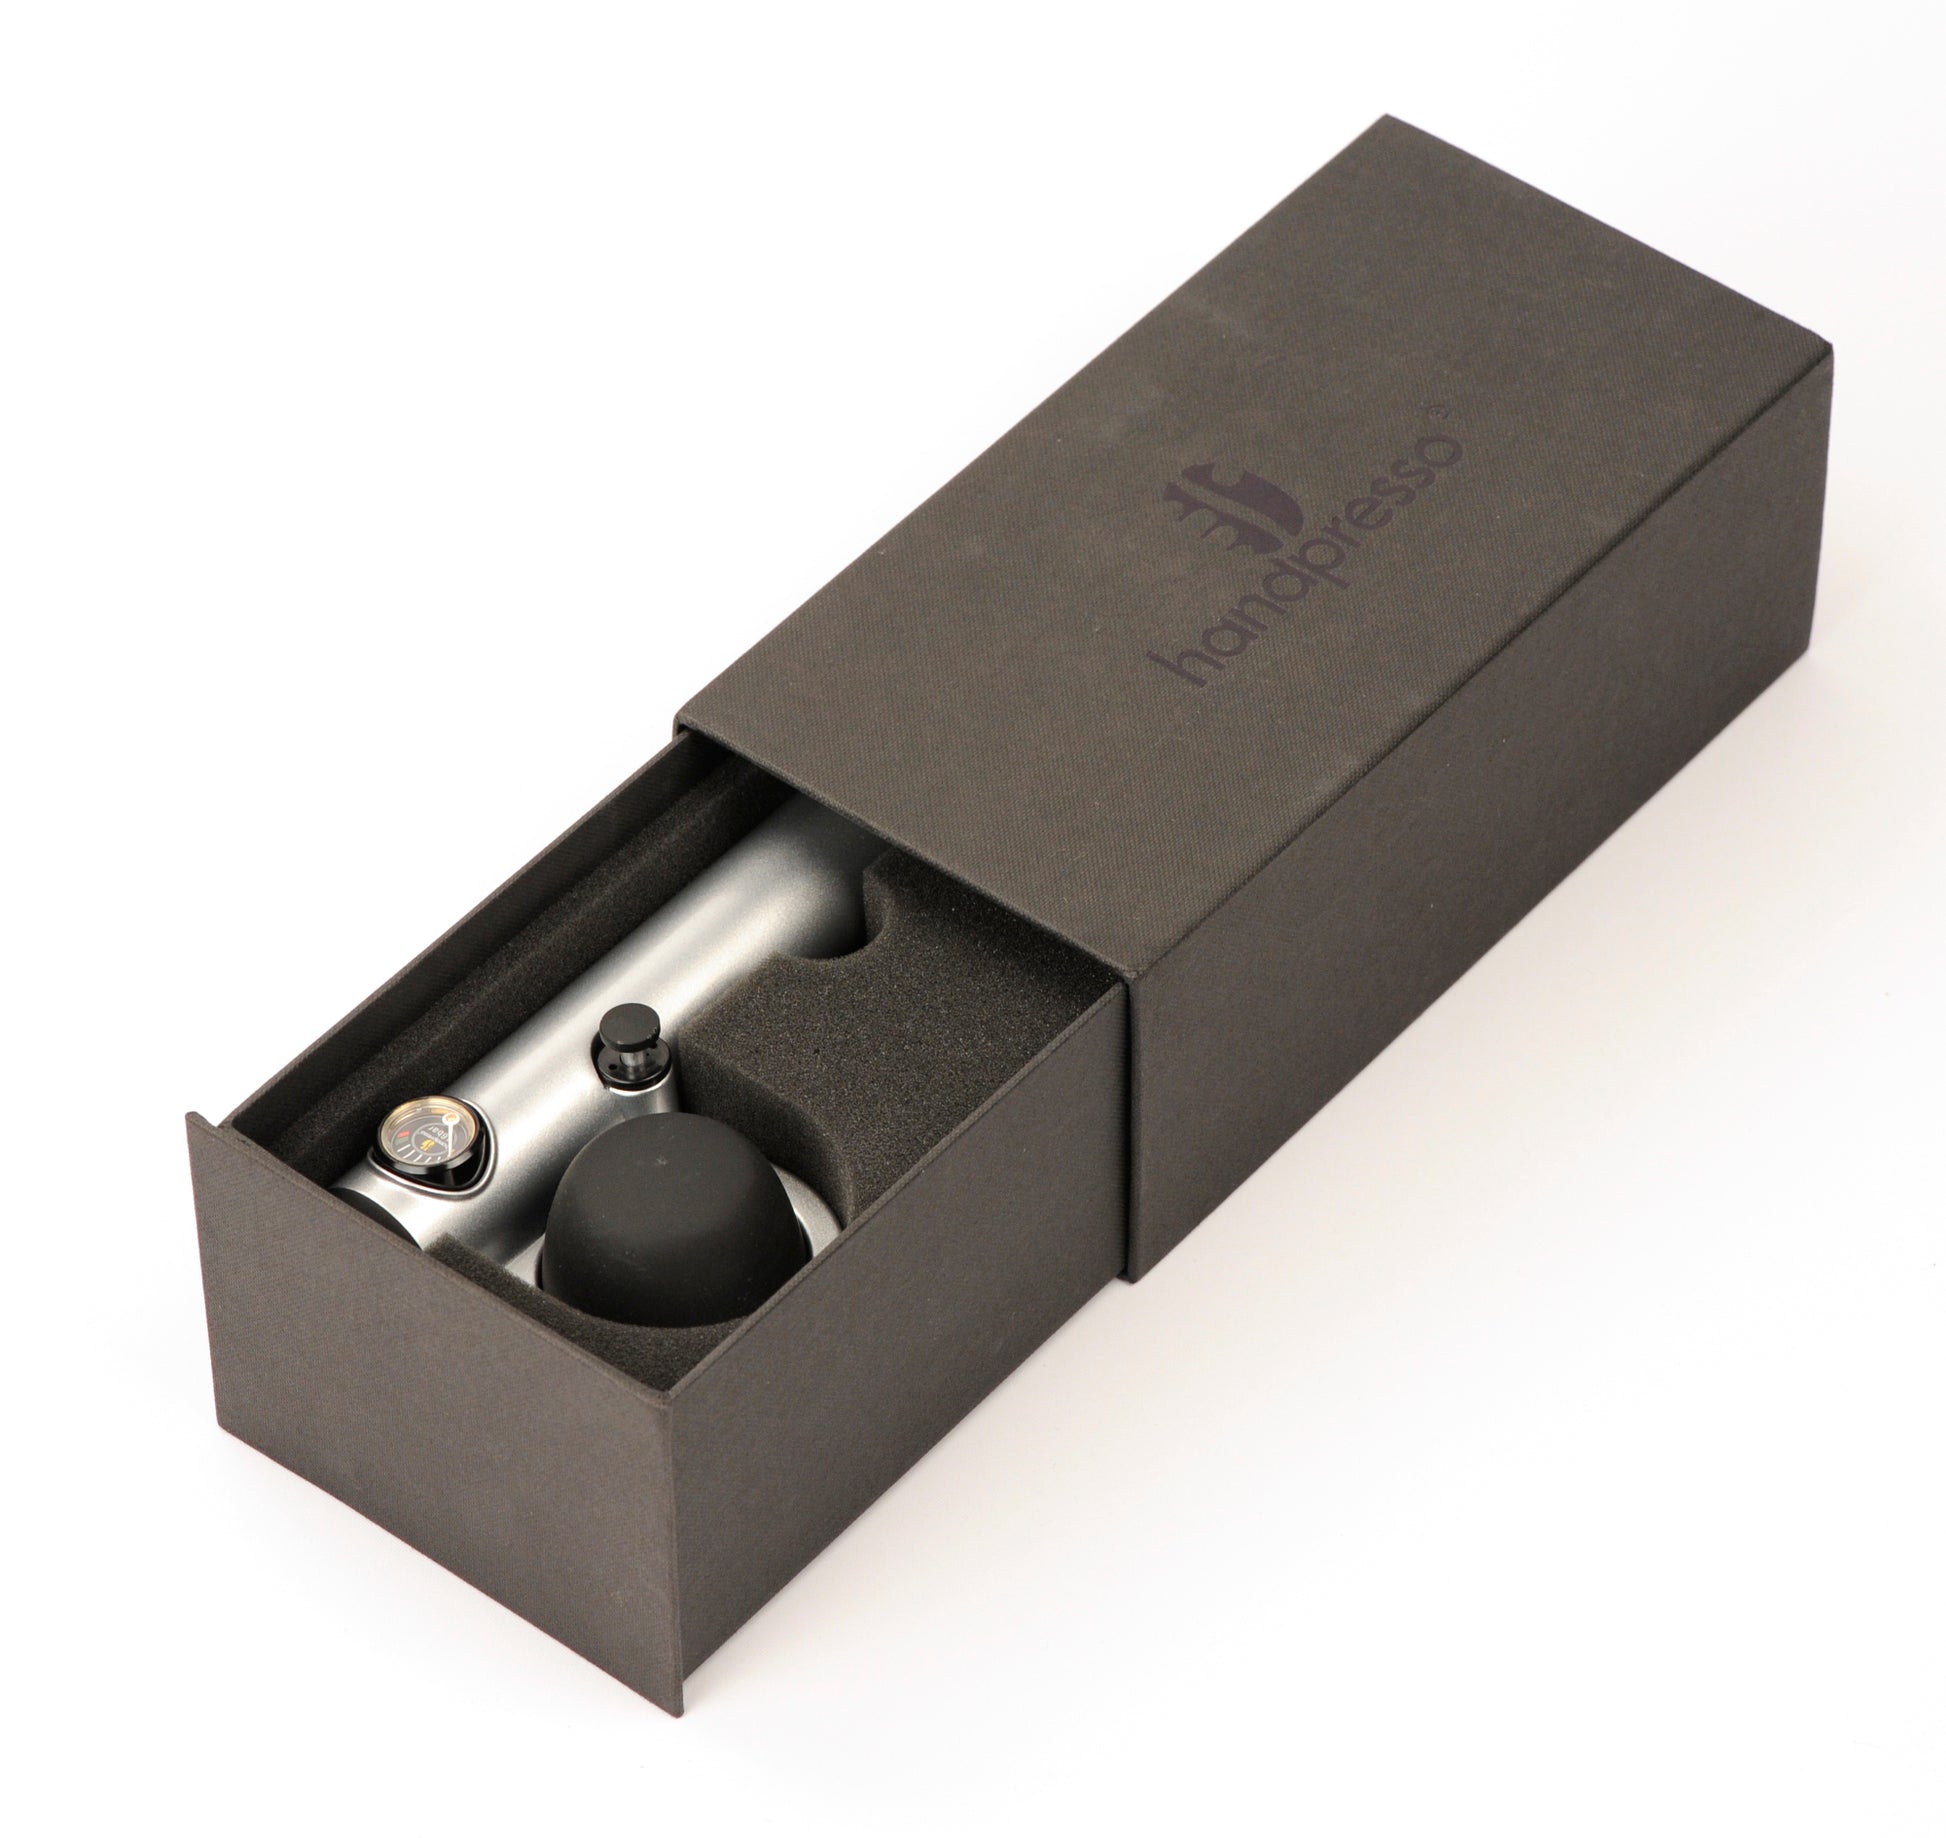 Editing Product “Handpresso Wild Hybrid in Silver in Box.